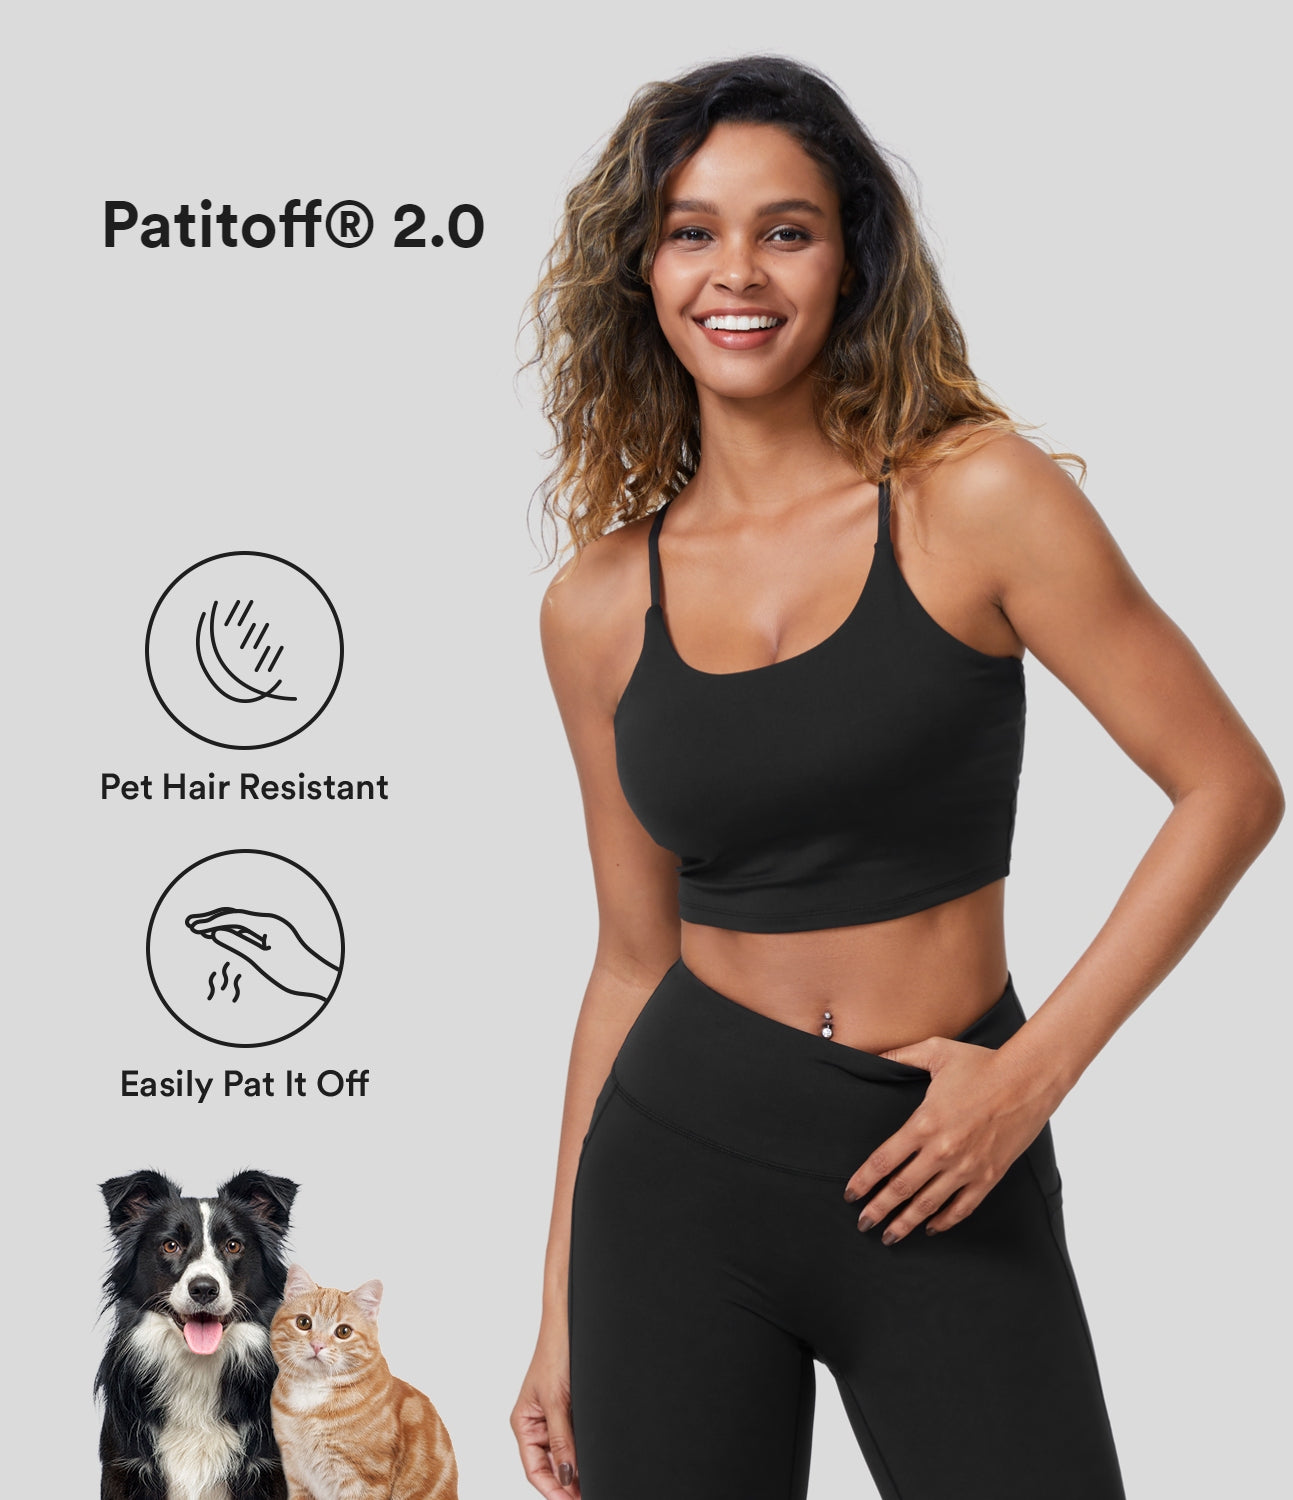 

Halara PatitoffВ® 2.0 Pet Hair Resistant Padded Cropped Yoga Cami Tank Top - Wild Ginger -  golf tops halter top tunic tops sleeveless tops